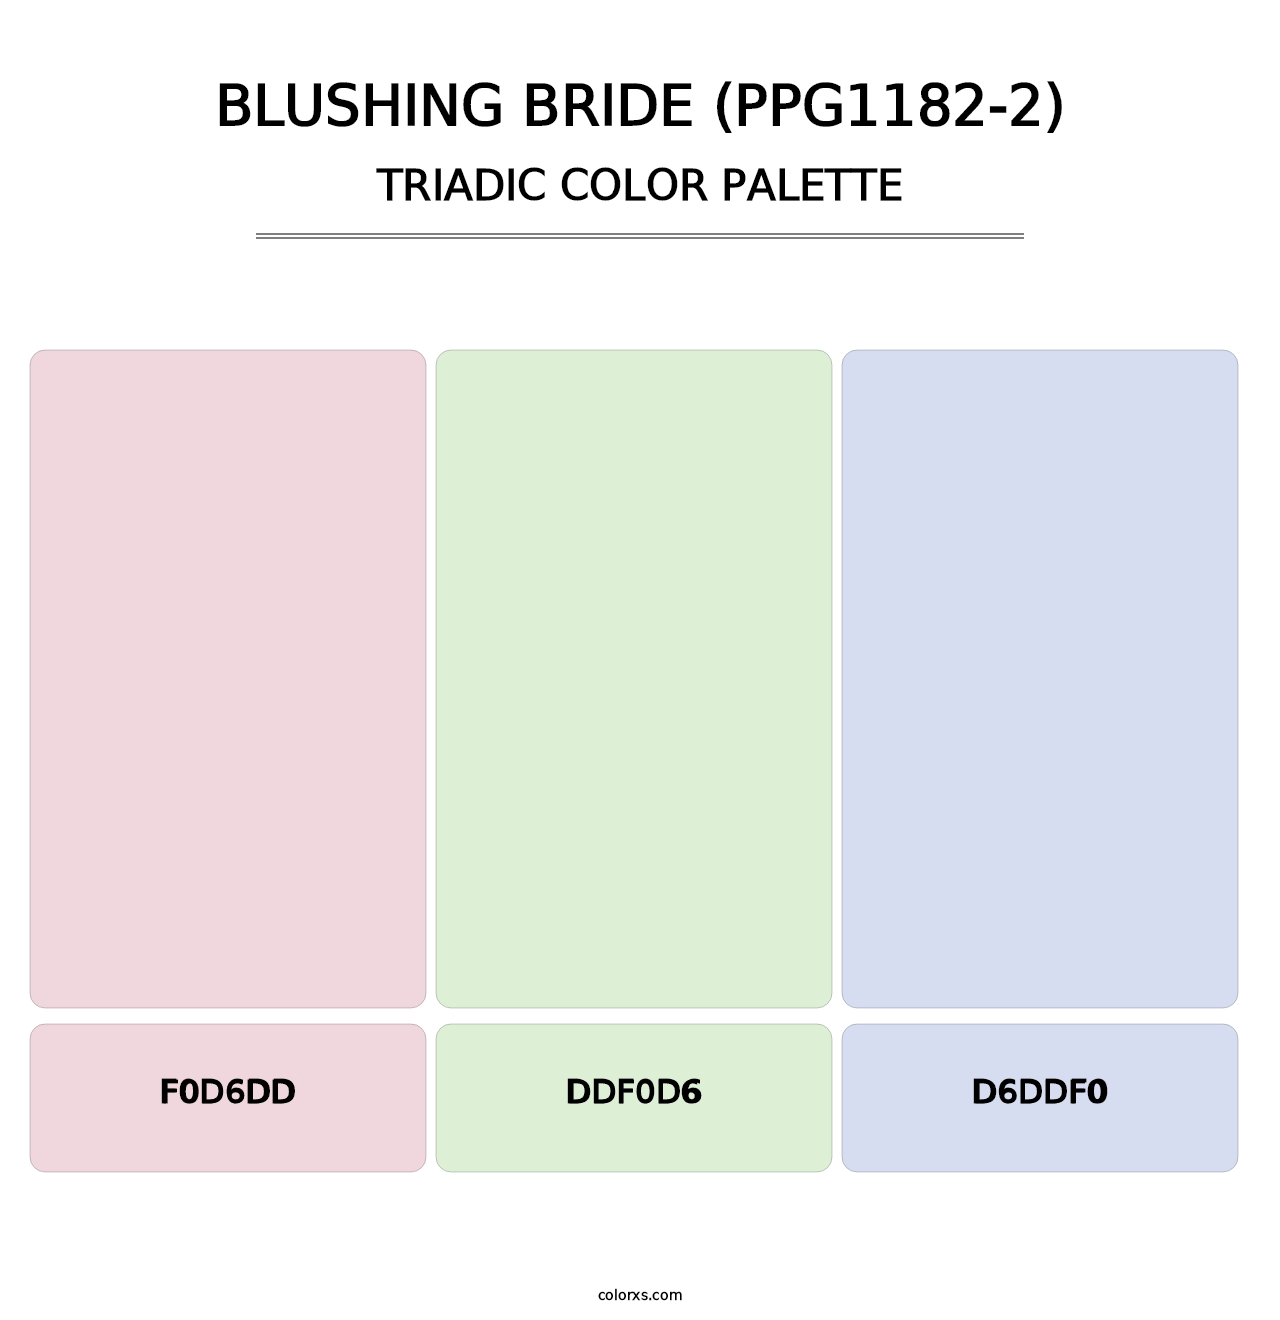 Blushing Bride (PPG1182-2) - Triadic Color Palette